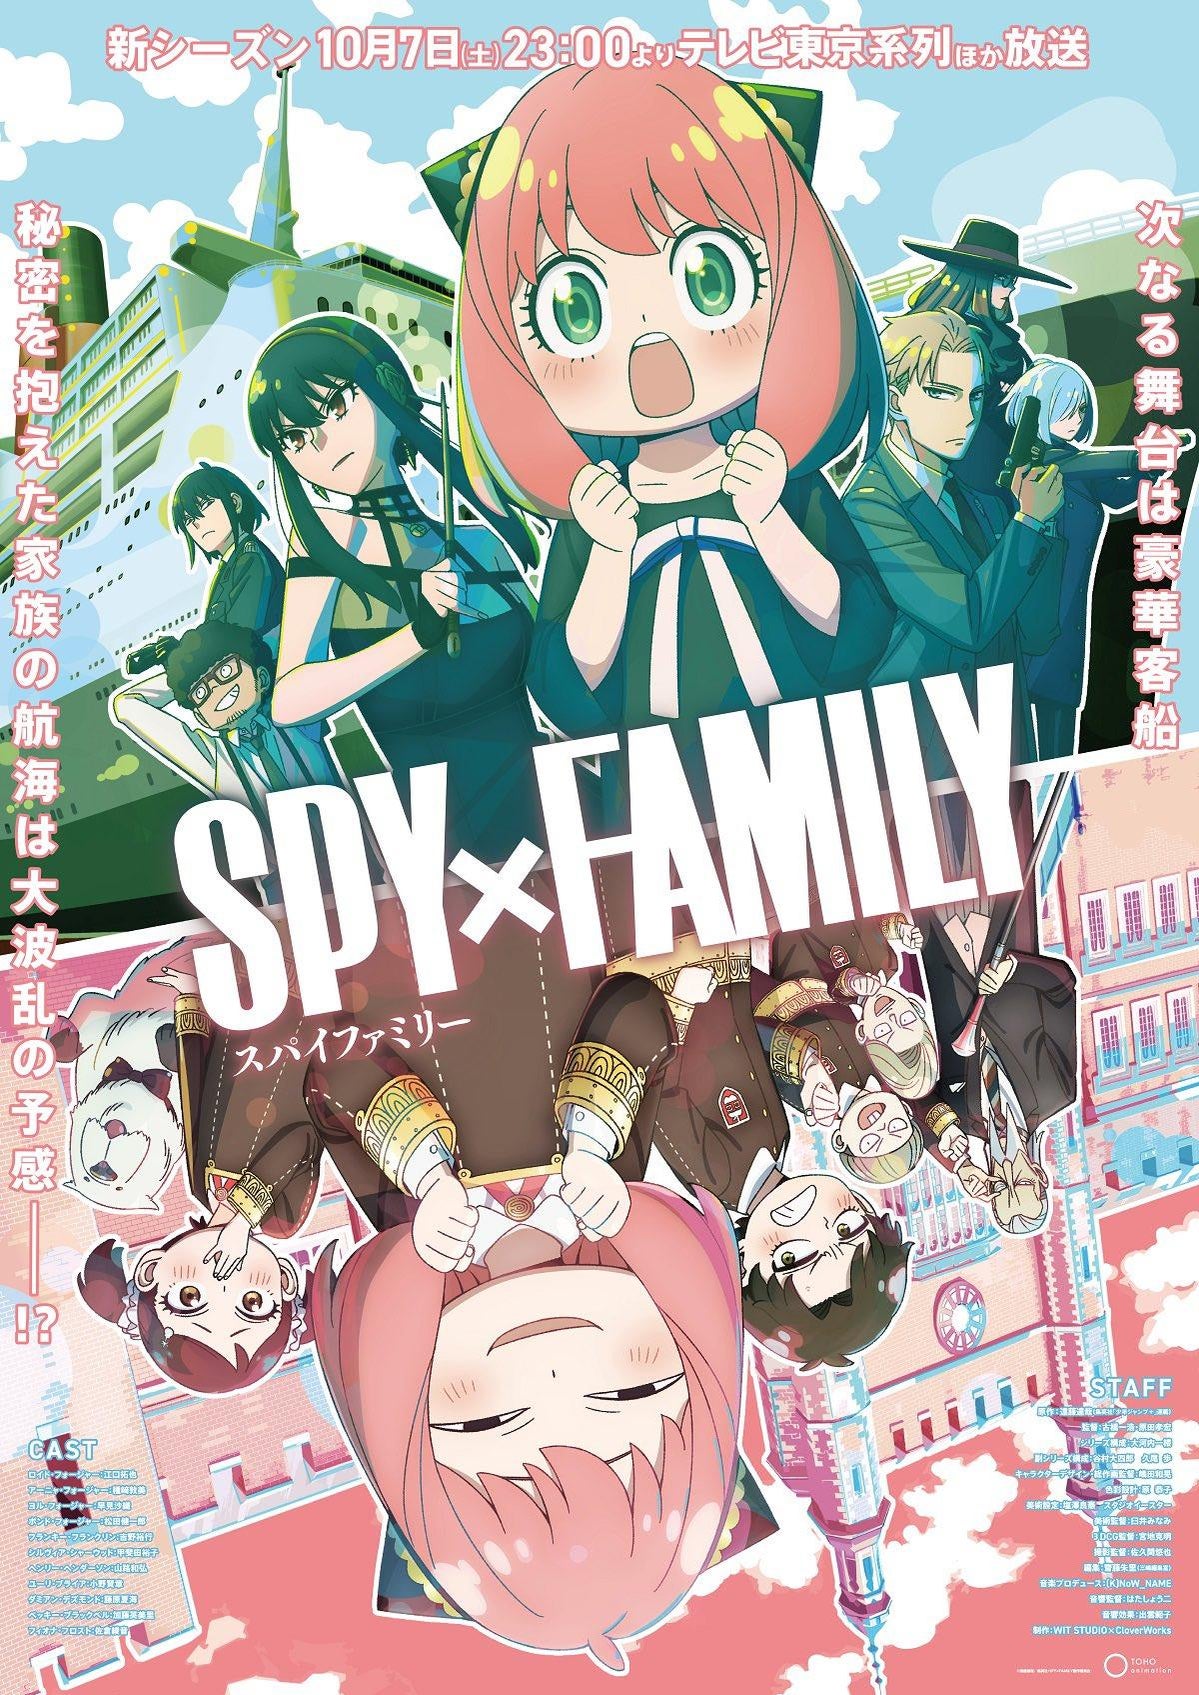 SPY X FAMILY Season 2 and Original Film Launch This Year — GeekTyrant